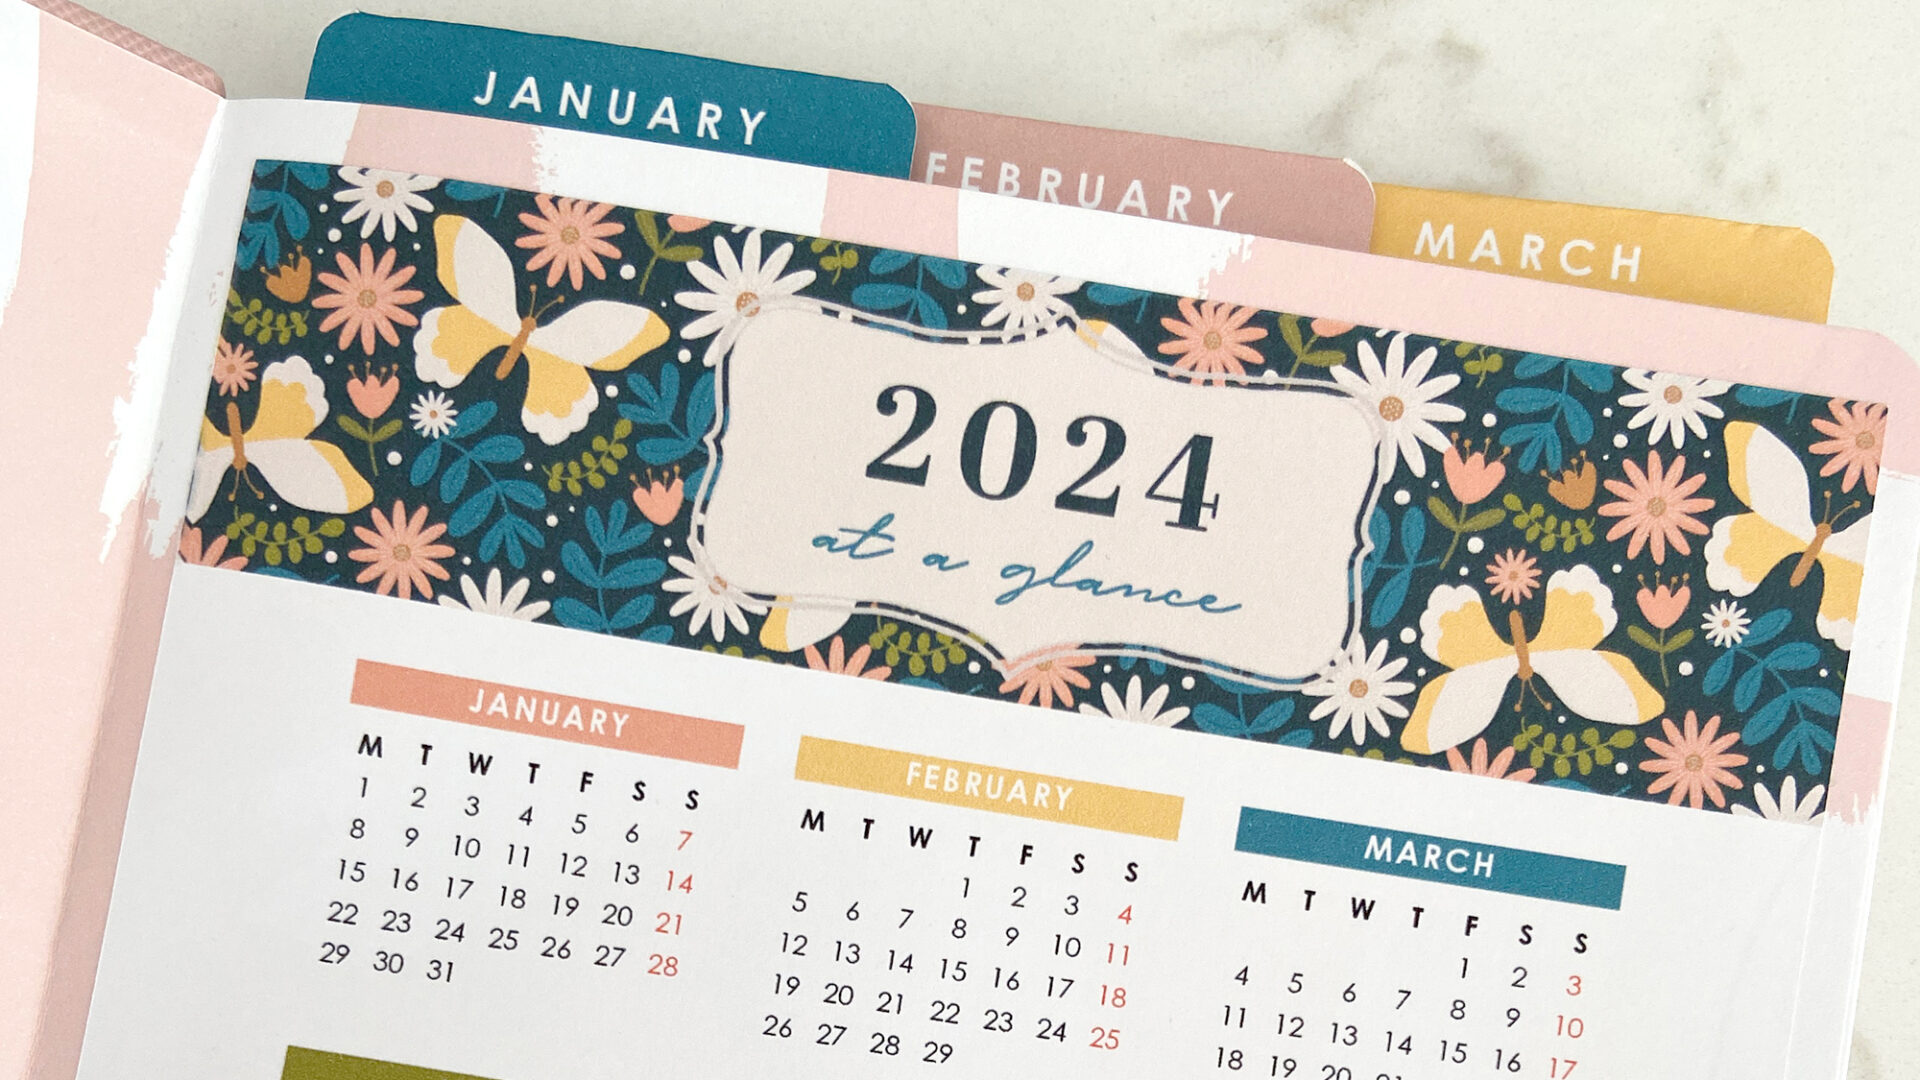 Minimalist 2024 Yearly Setup | Digital Bullet Journal Theme